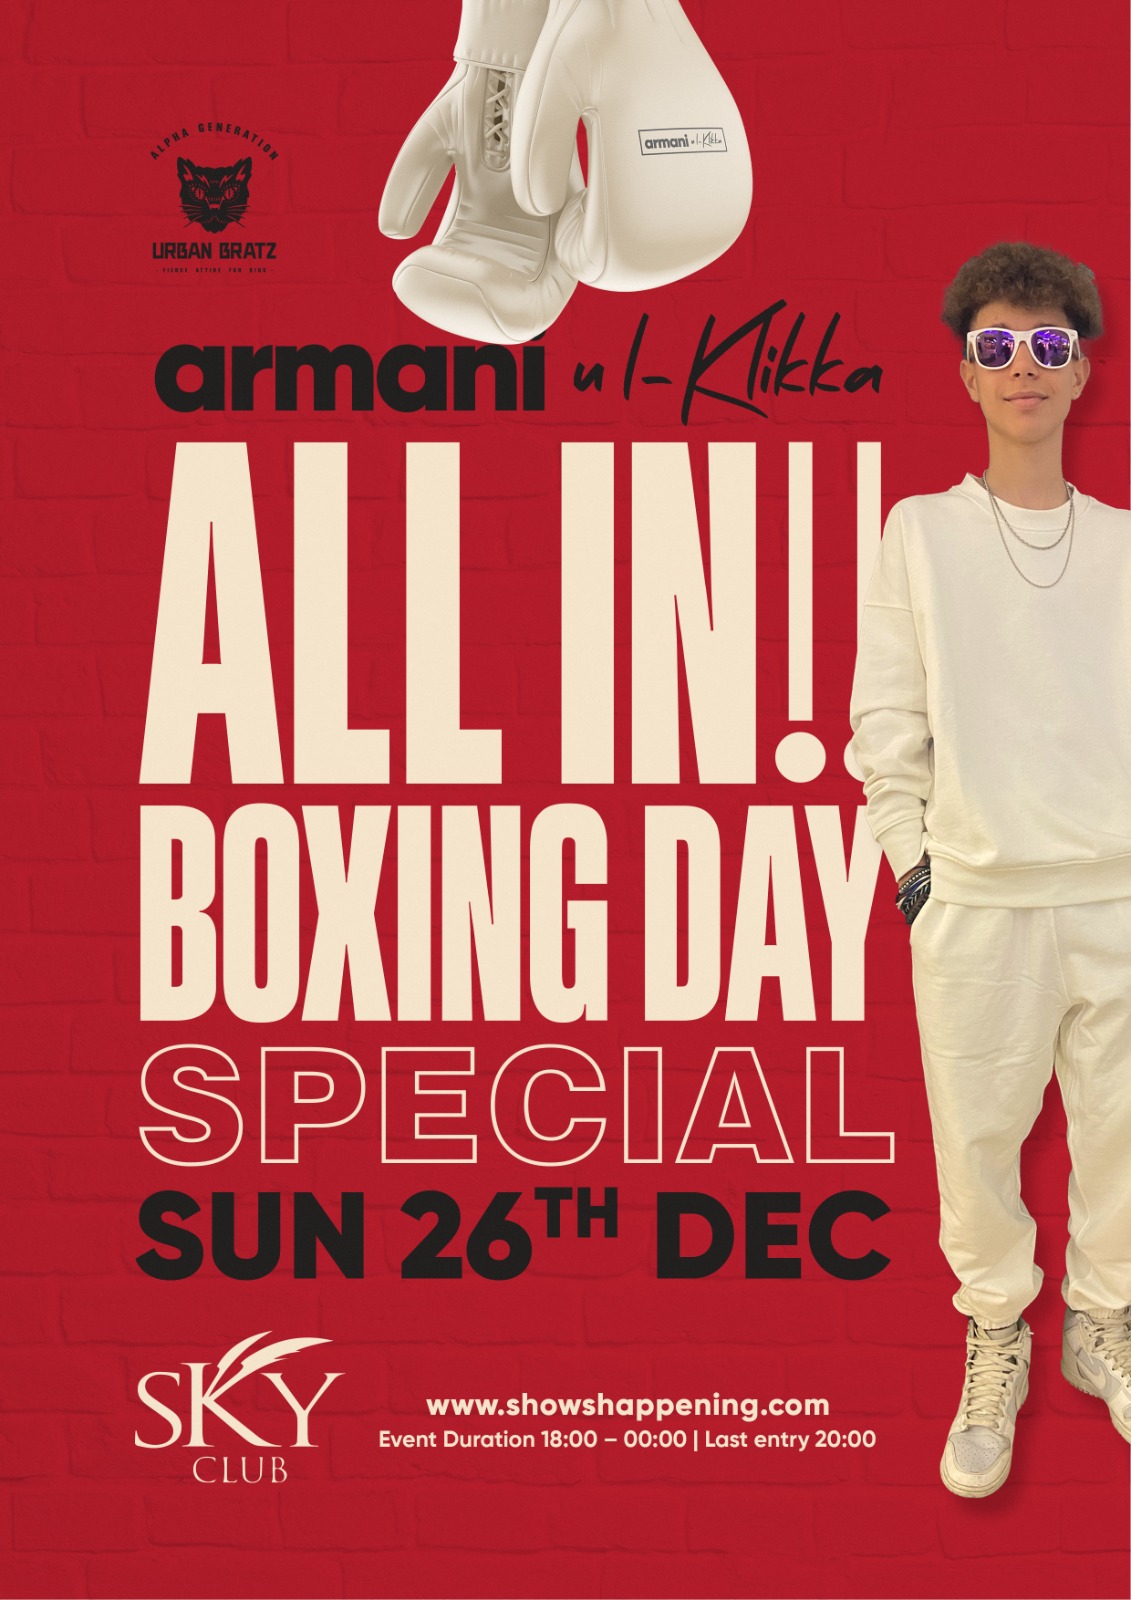 Armani u L-Klikka presents ALL IN BOXING DAY SPECIAL poster